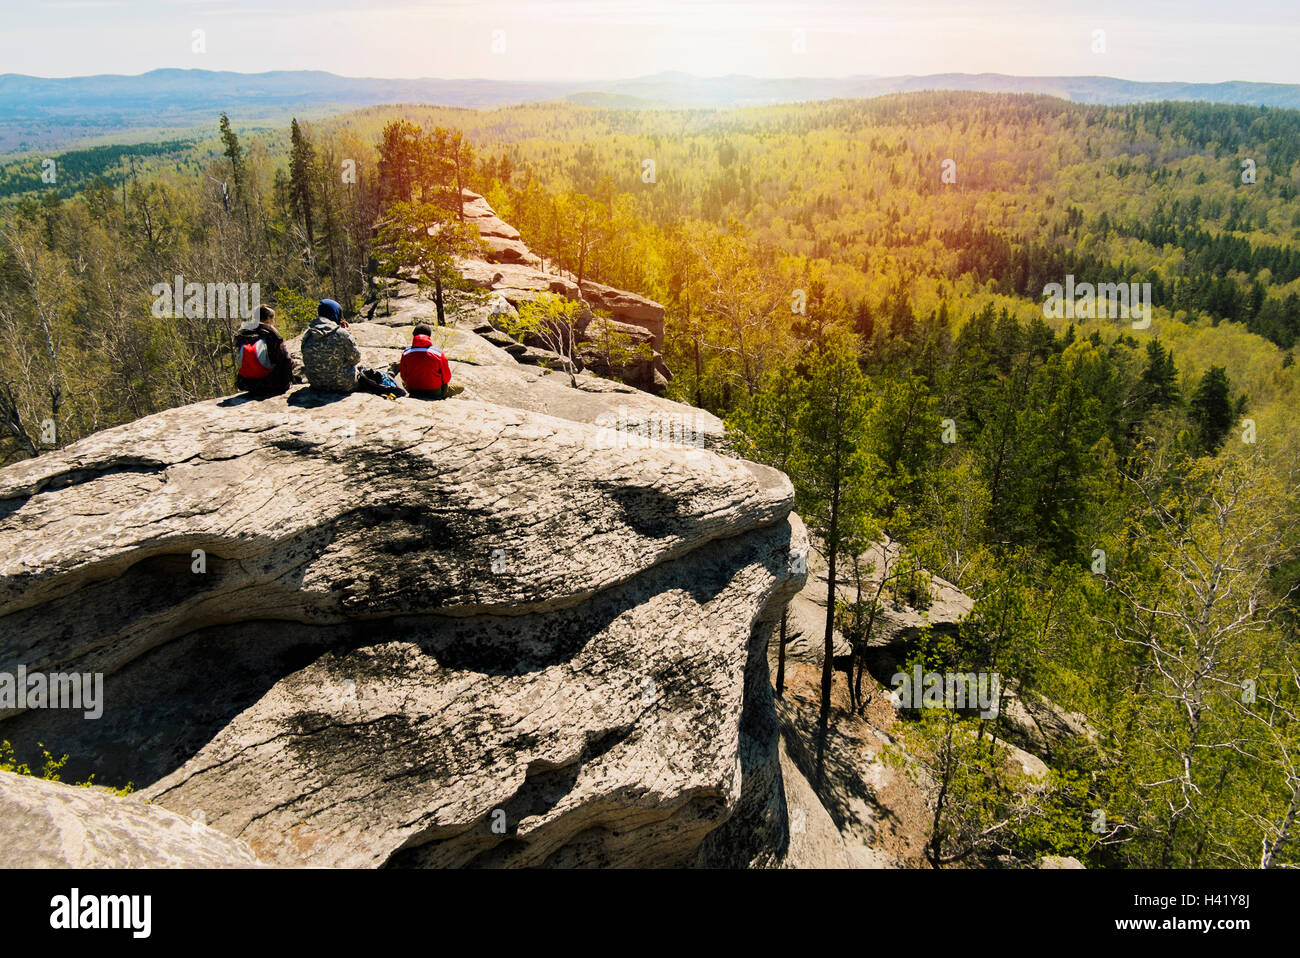 Caucasian friends sitting on mountain rock admiring scenic view Stock Photo